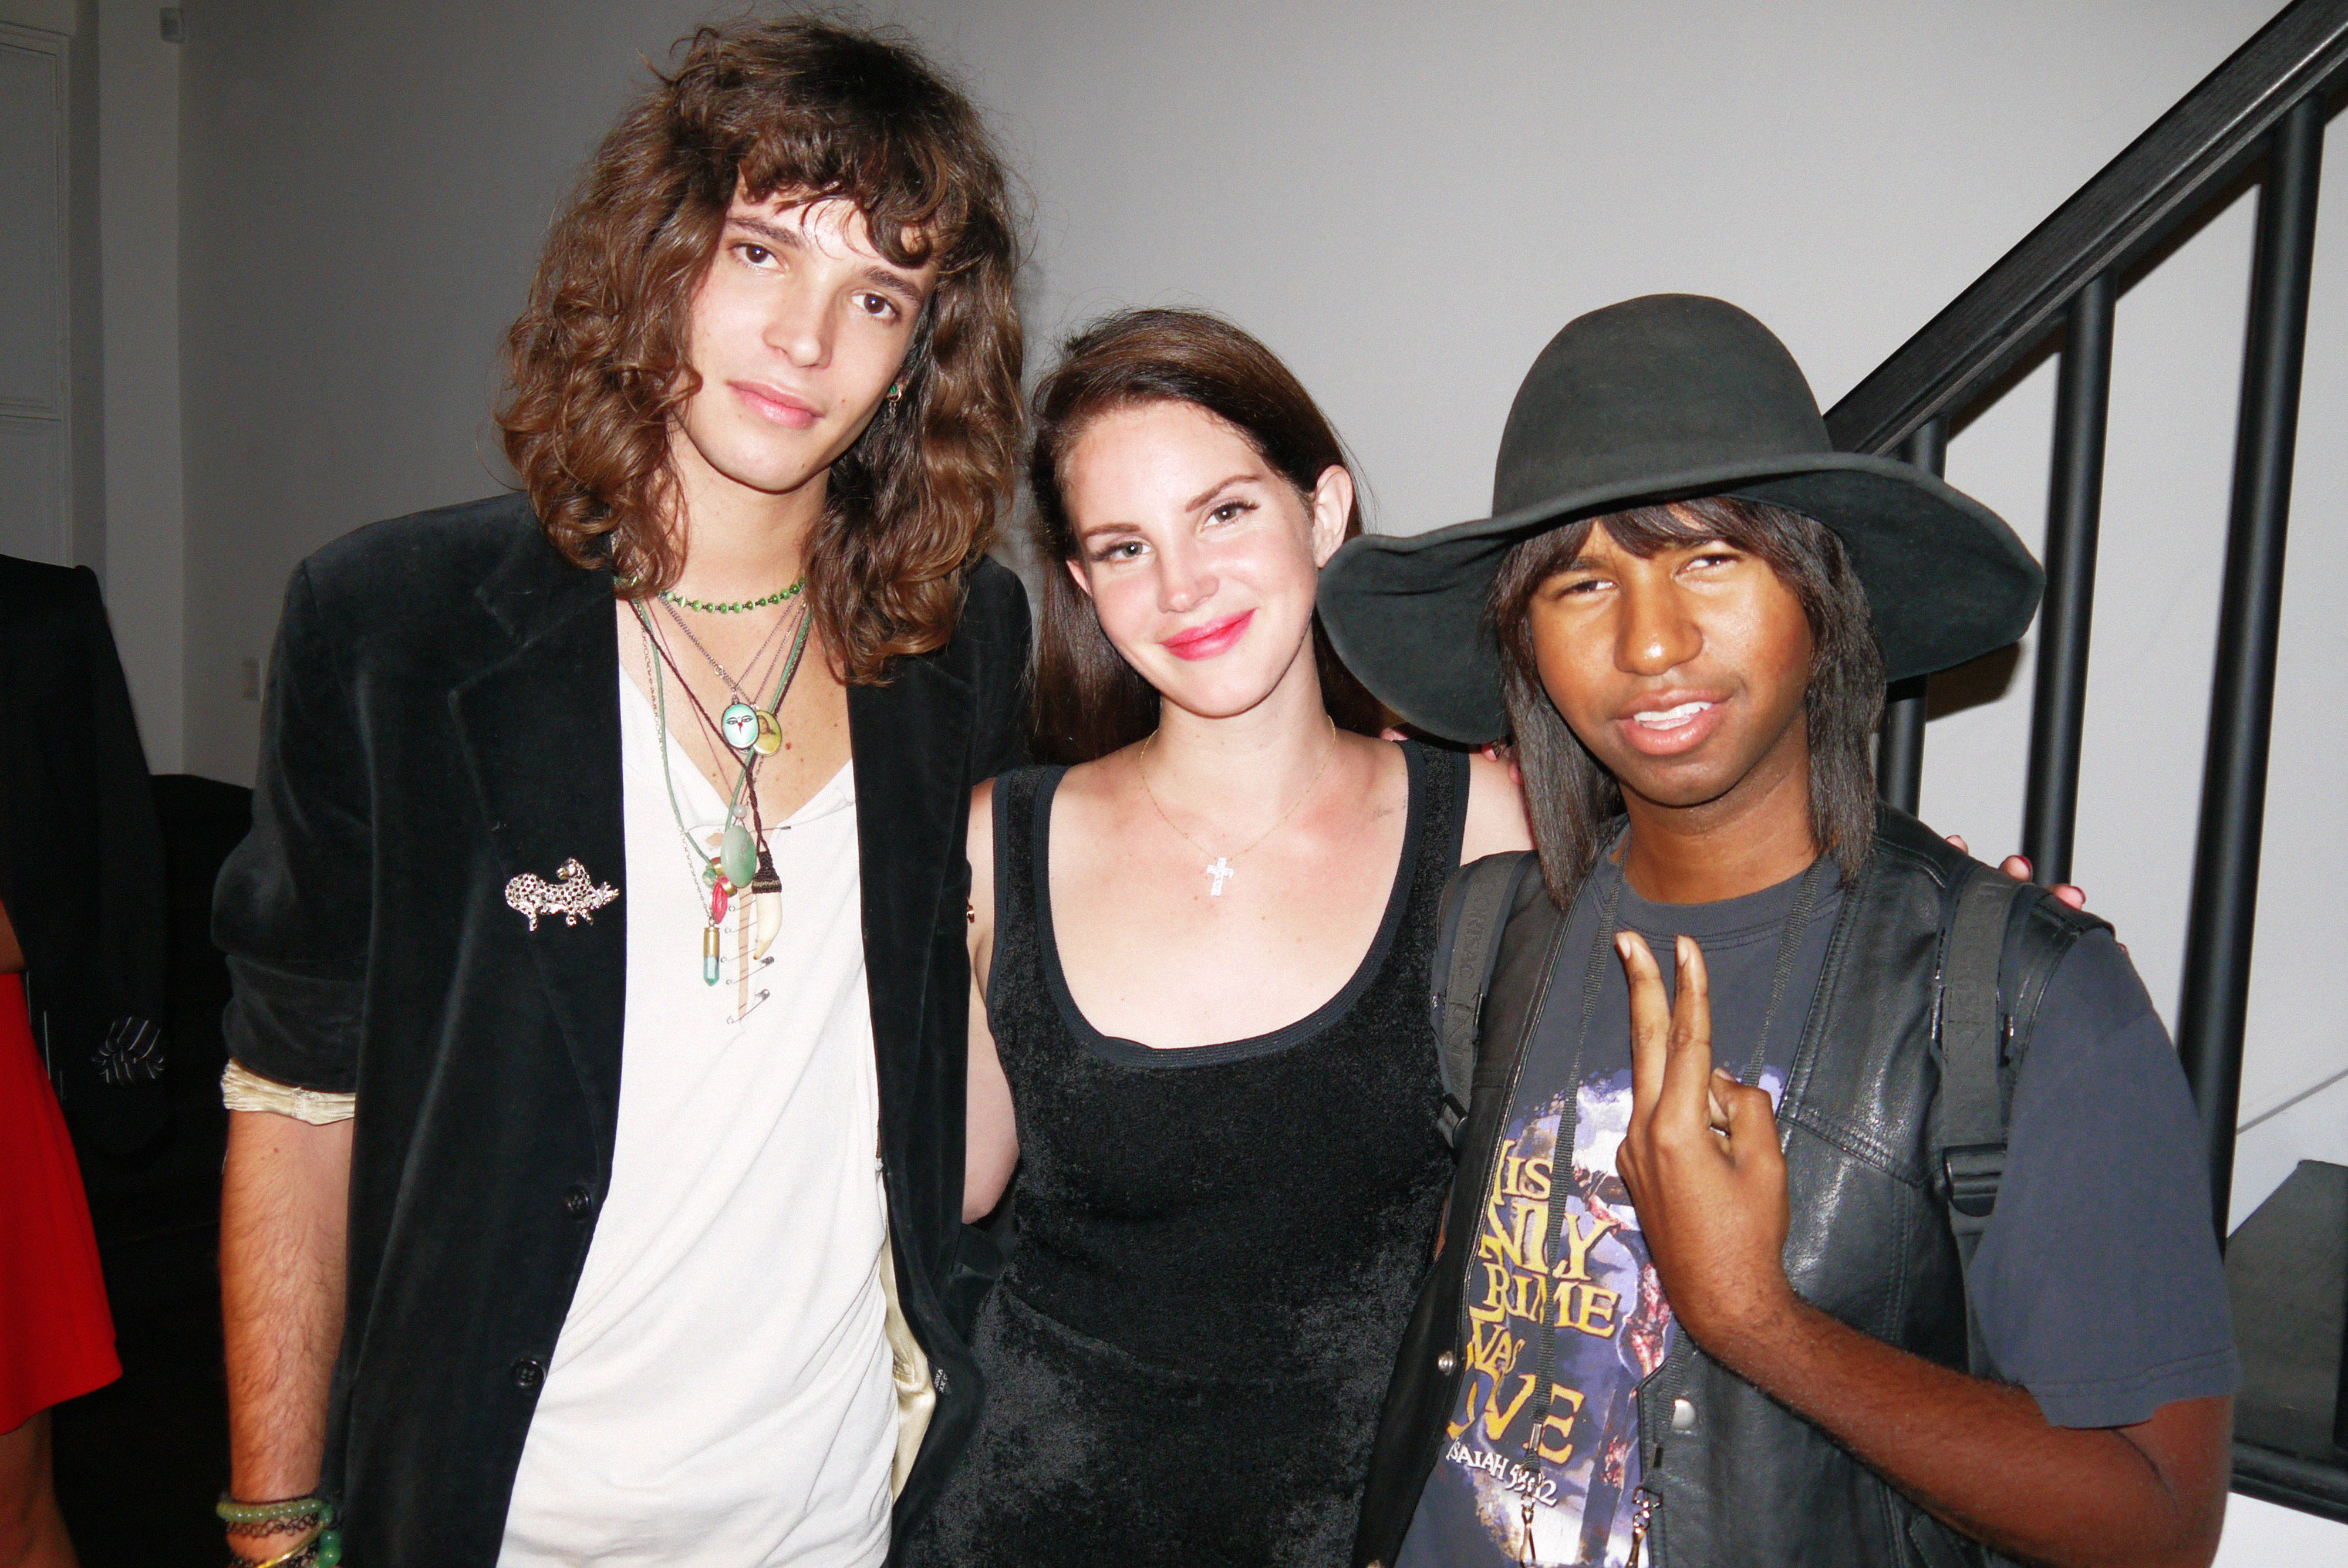 Prince + Jacob with Lana Del Rey